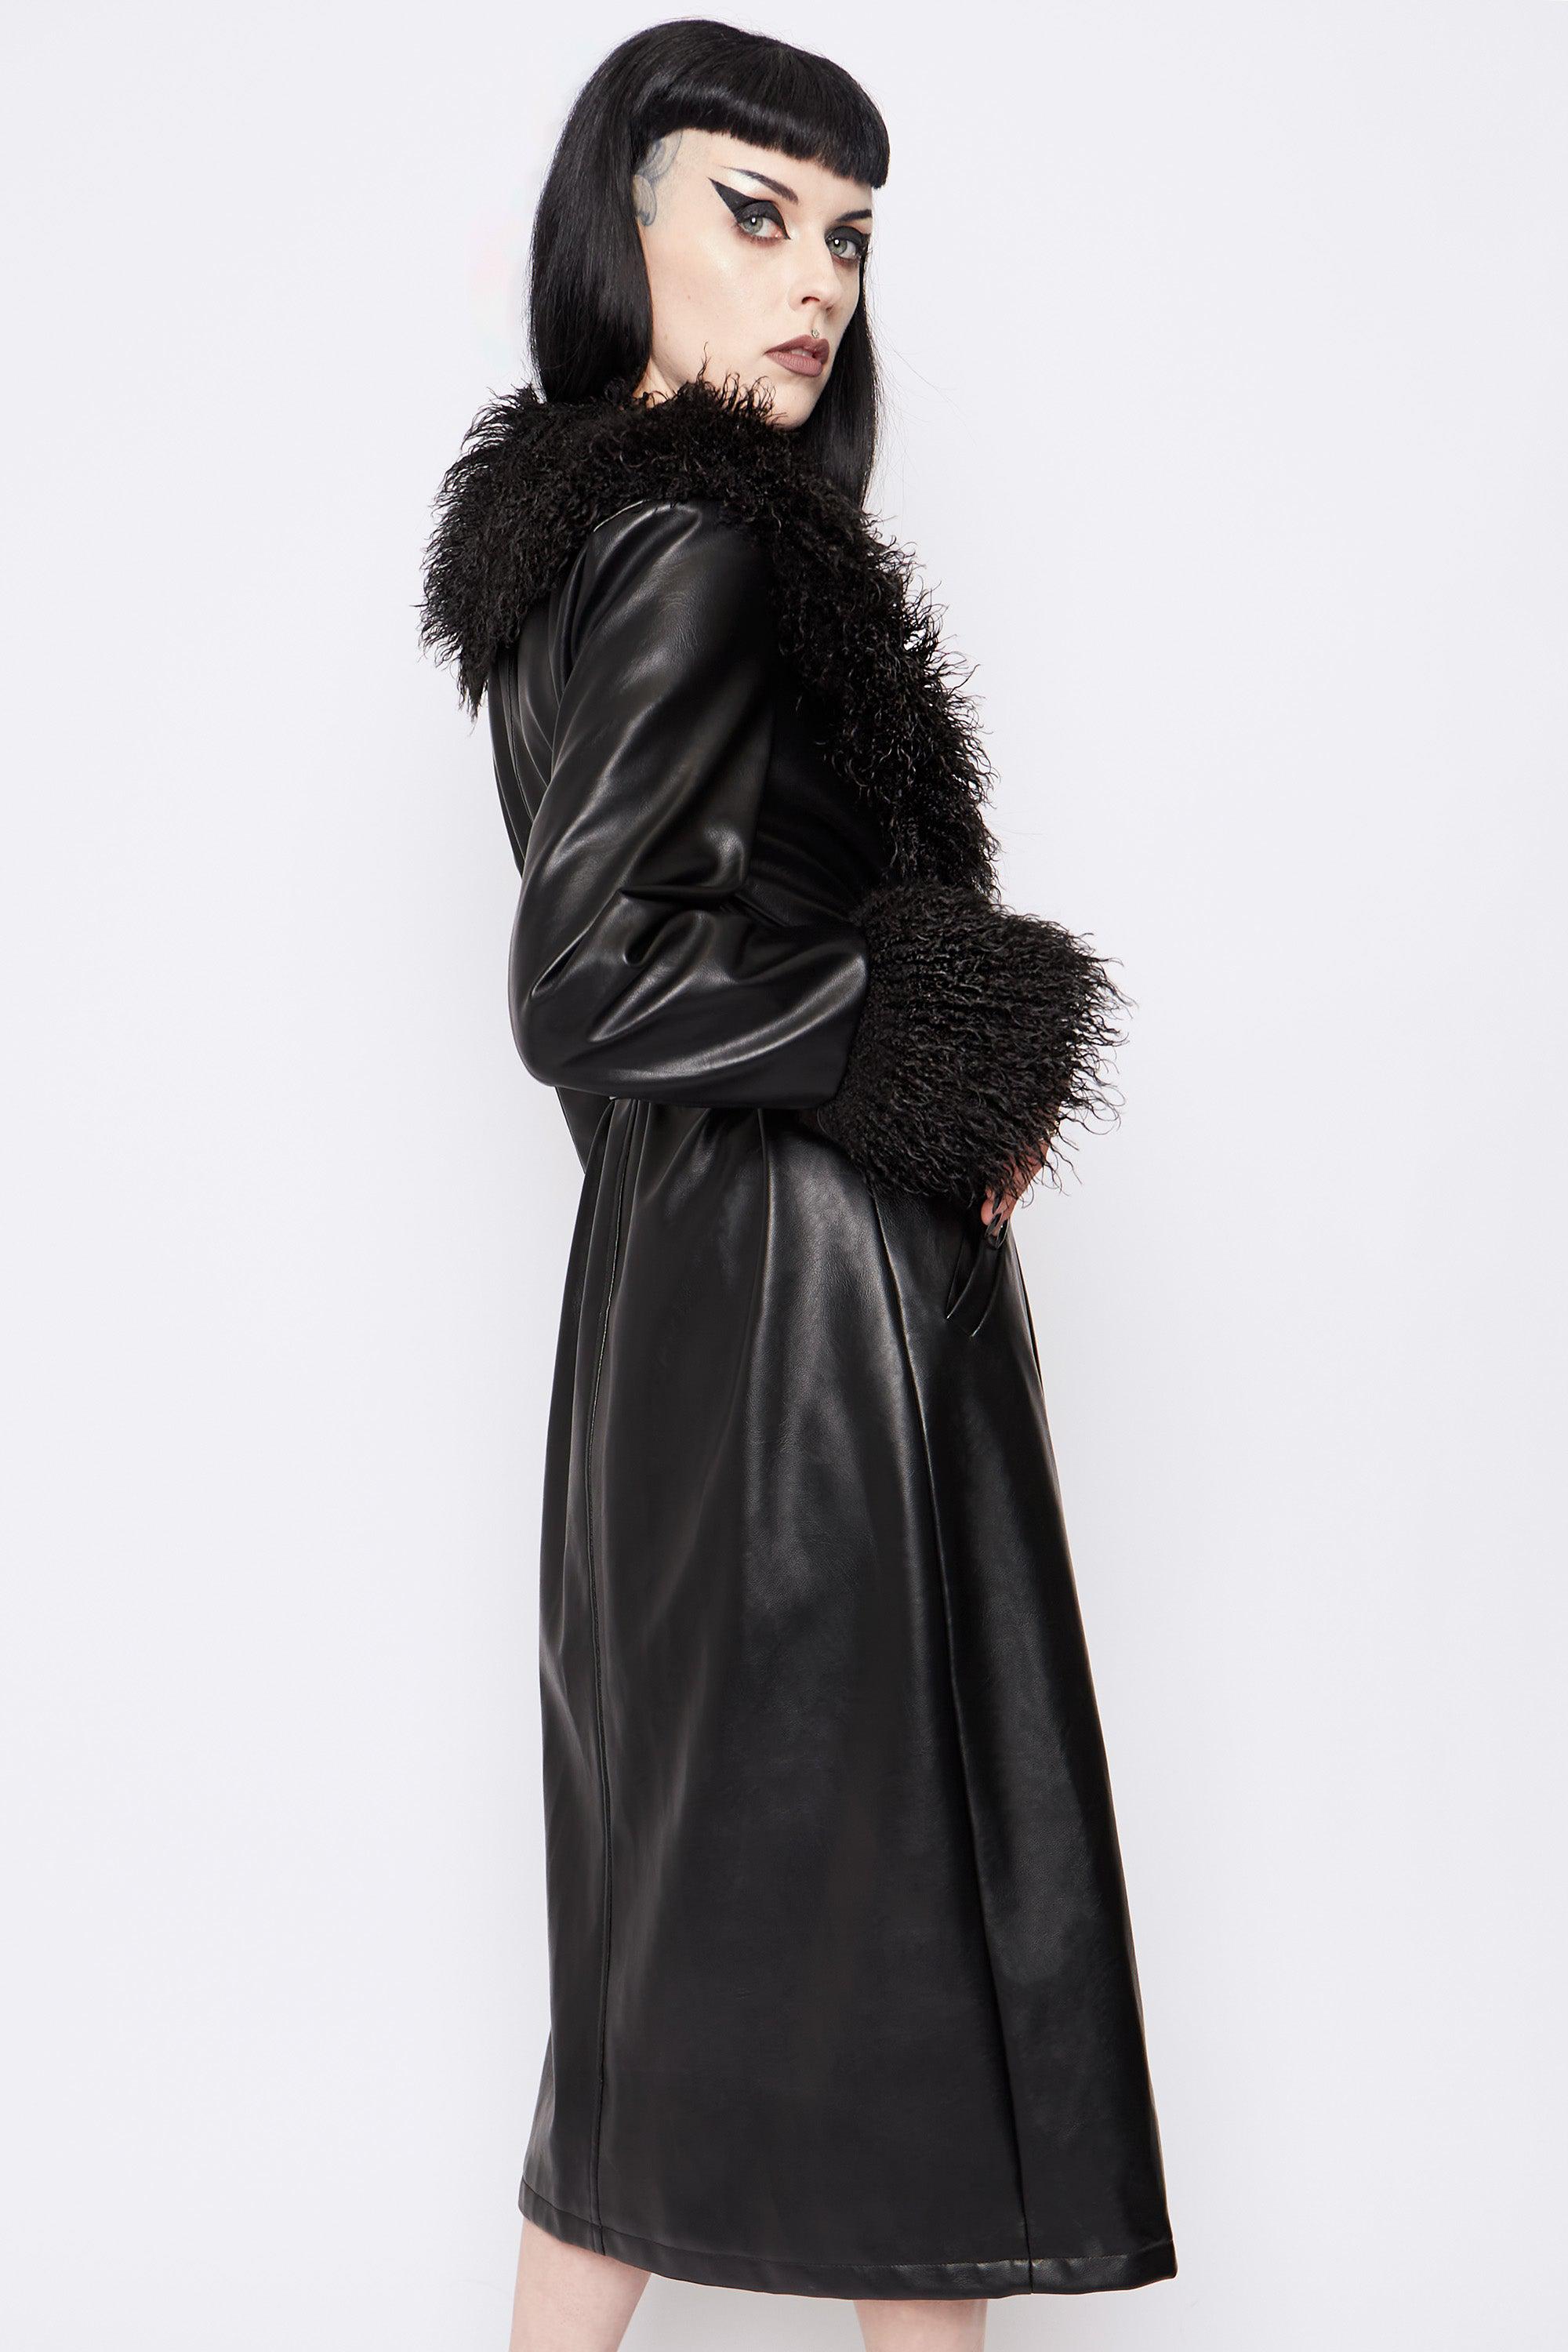 Lori Vegan Leather & Faux Fur Jacket - Mary Wyatt London